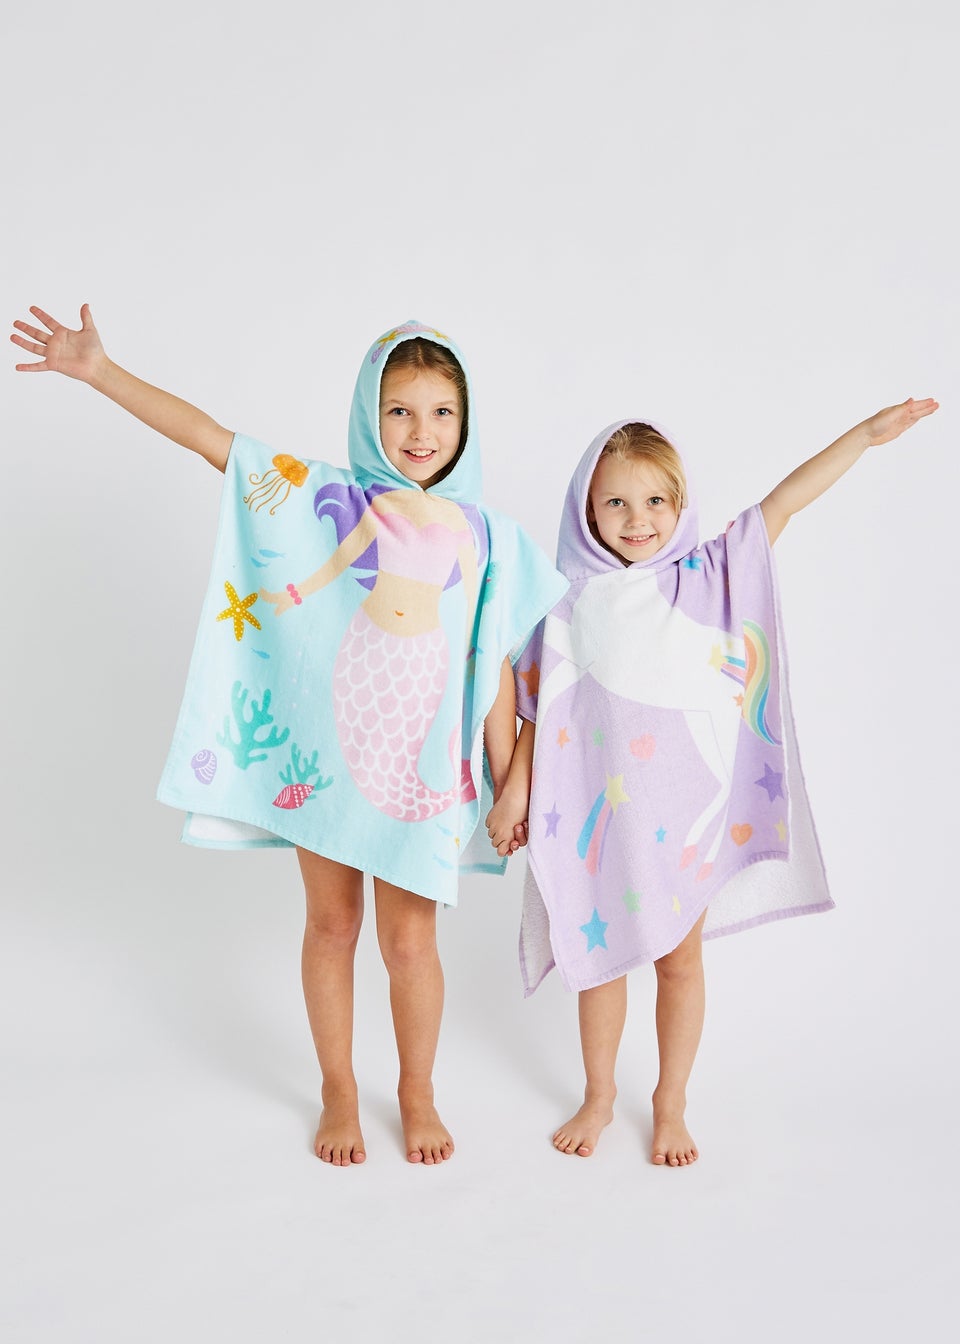 Catherine Lansfield Aqua Kids Mermaid Hooded Towel Poncho